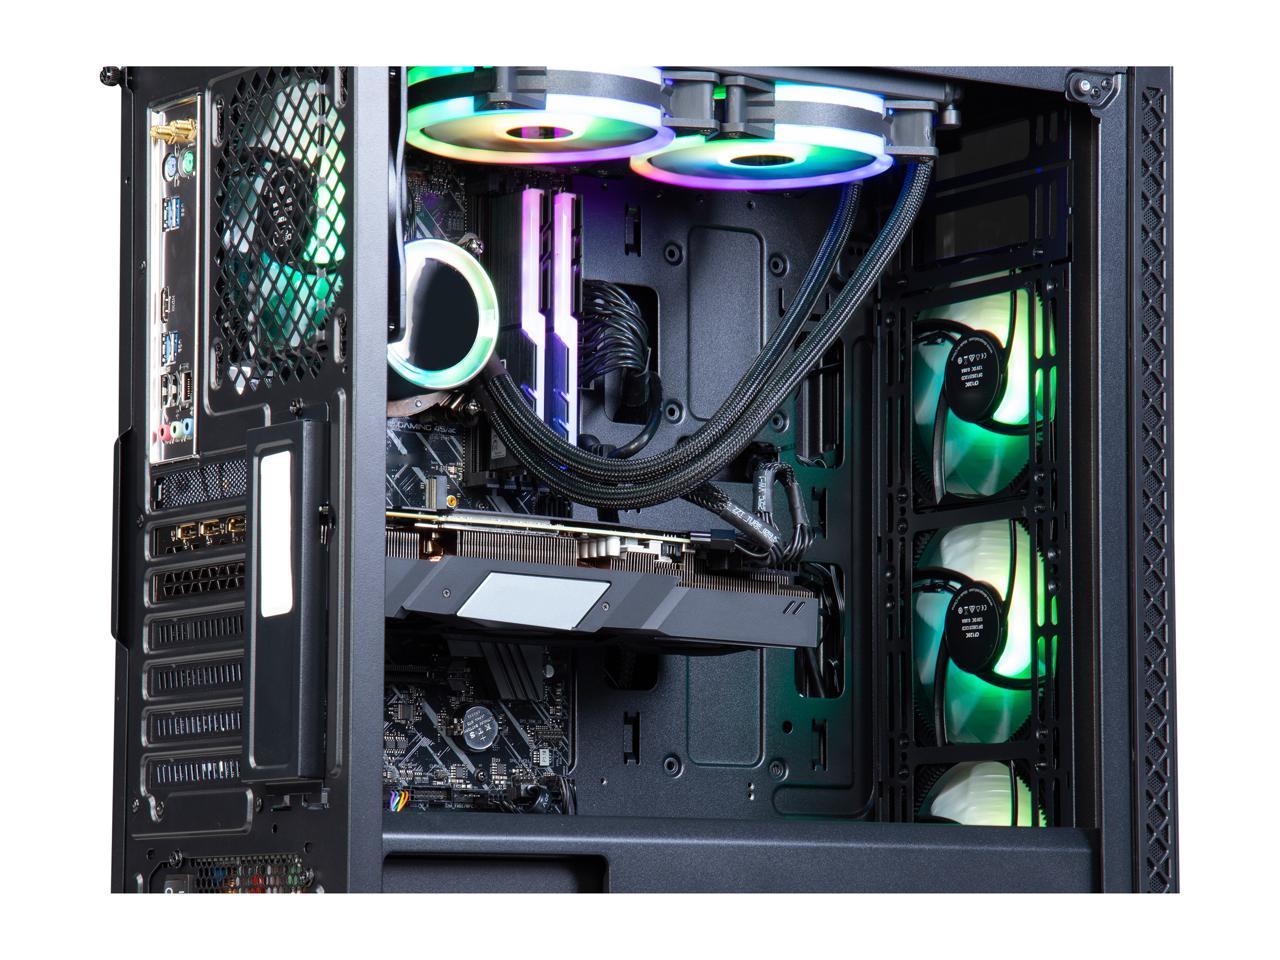 ABS Mage H - Intel i9 10900KF - GeForce RTX 2080 Super - G.Skill 16GB DDR4 - 1TB M.2 NVMe SSD - Gaming Desktop PC